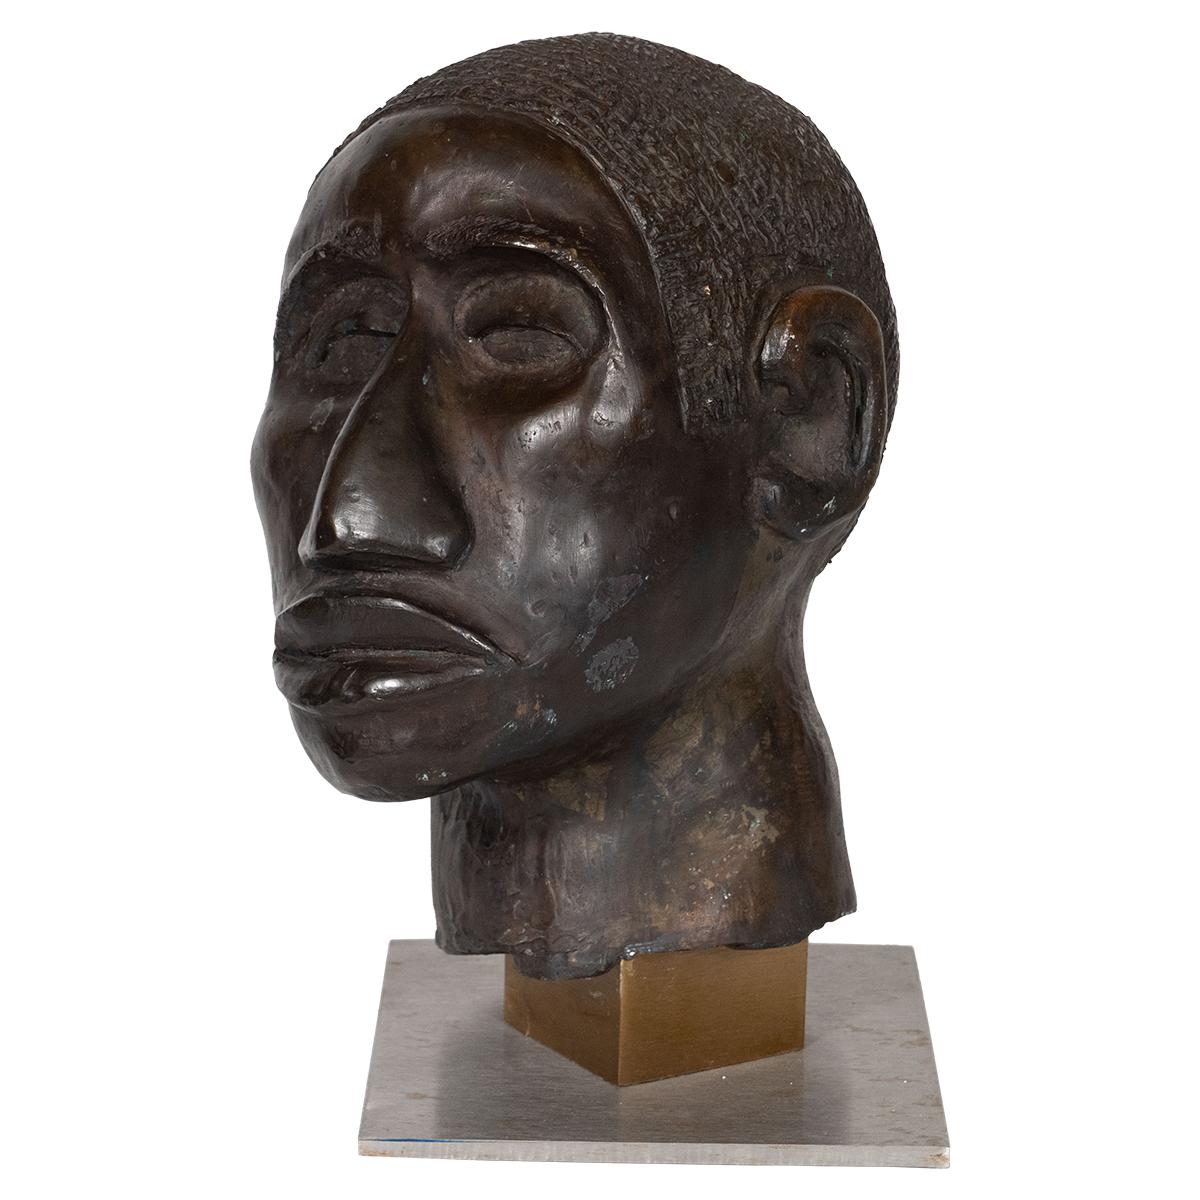 Cast bronze sculpture of a man's head on mixed metal base.